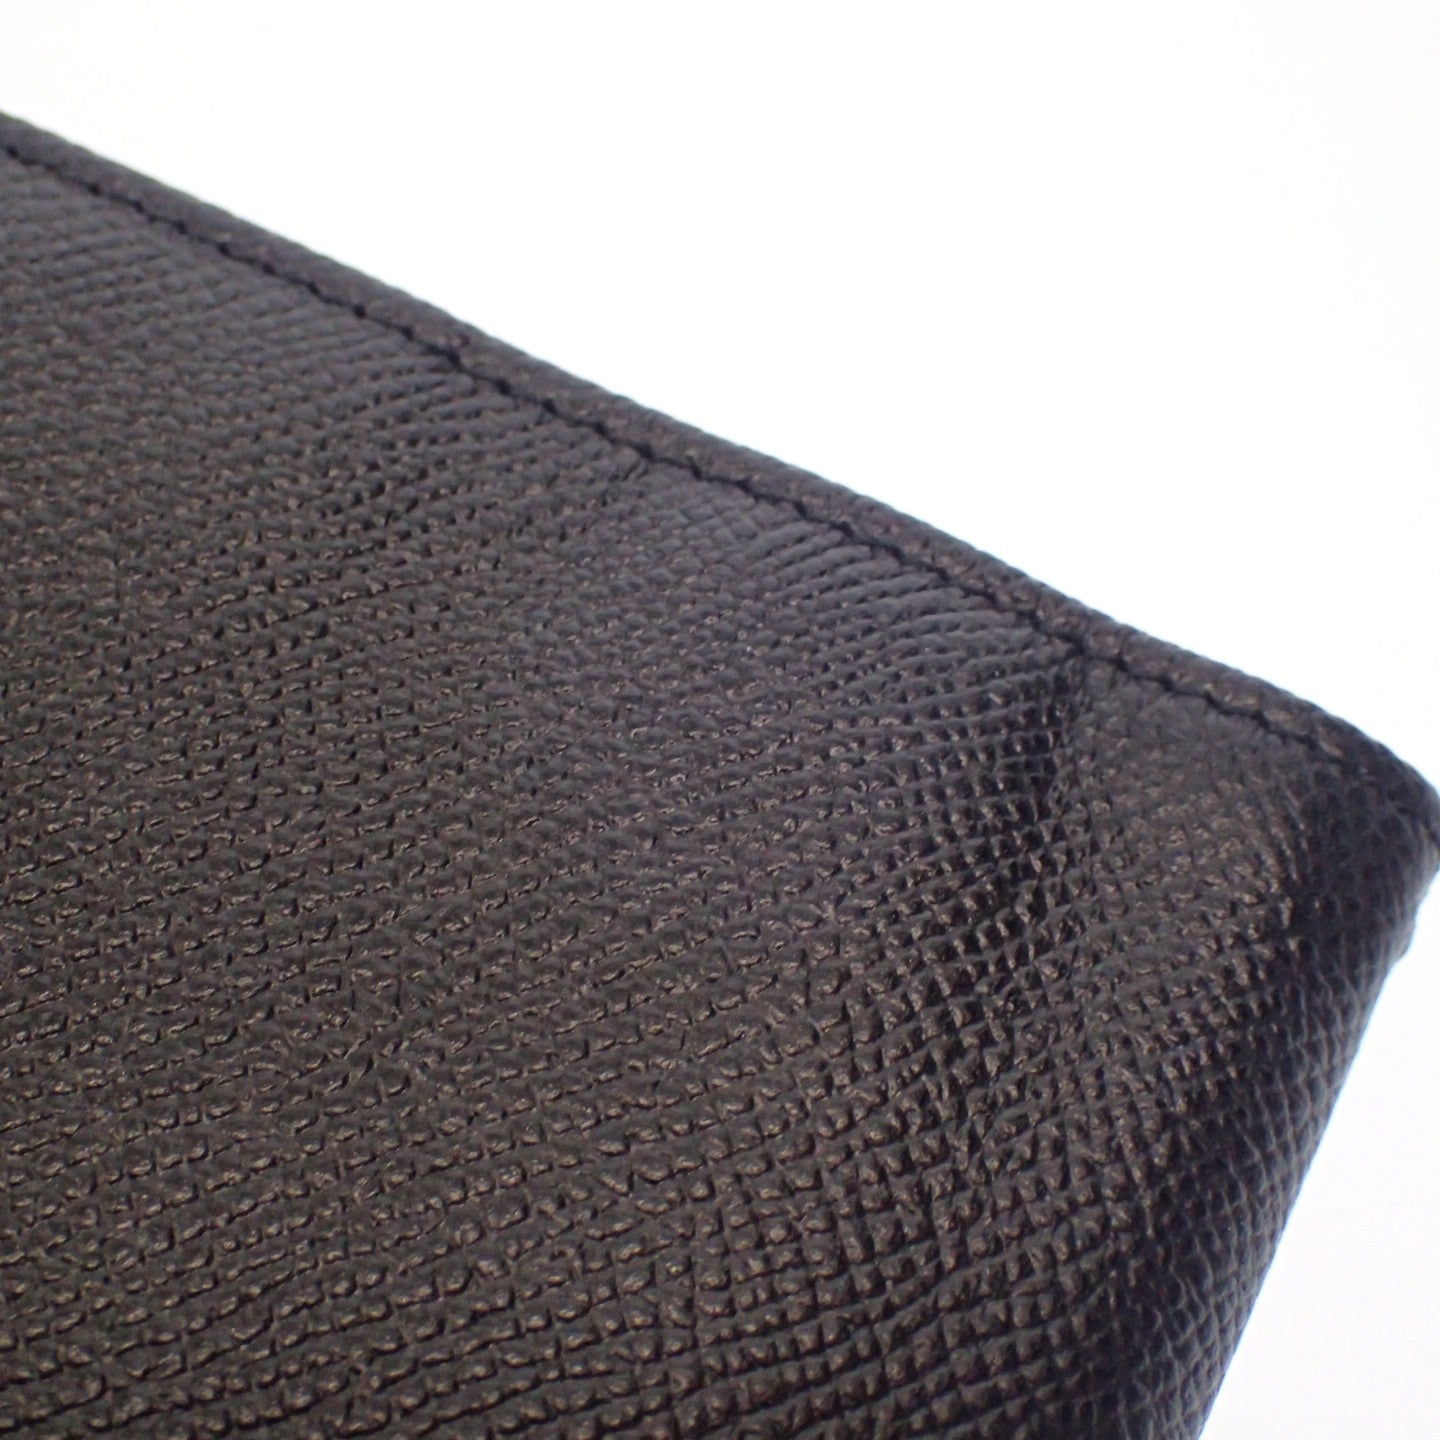 Very good condition◆Valentino Garavani Tablet Case Leather Black VALENTINO GARAVANI [AFI20] 